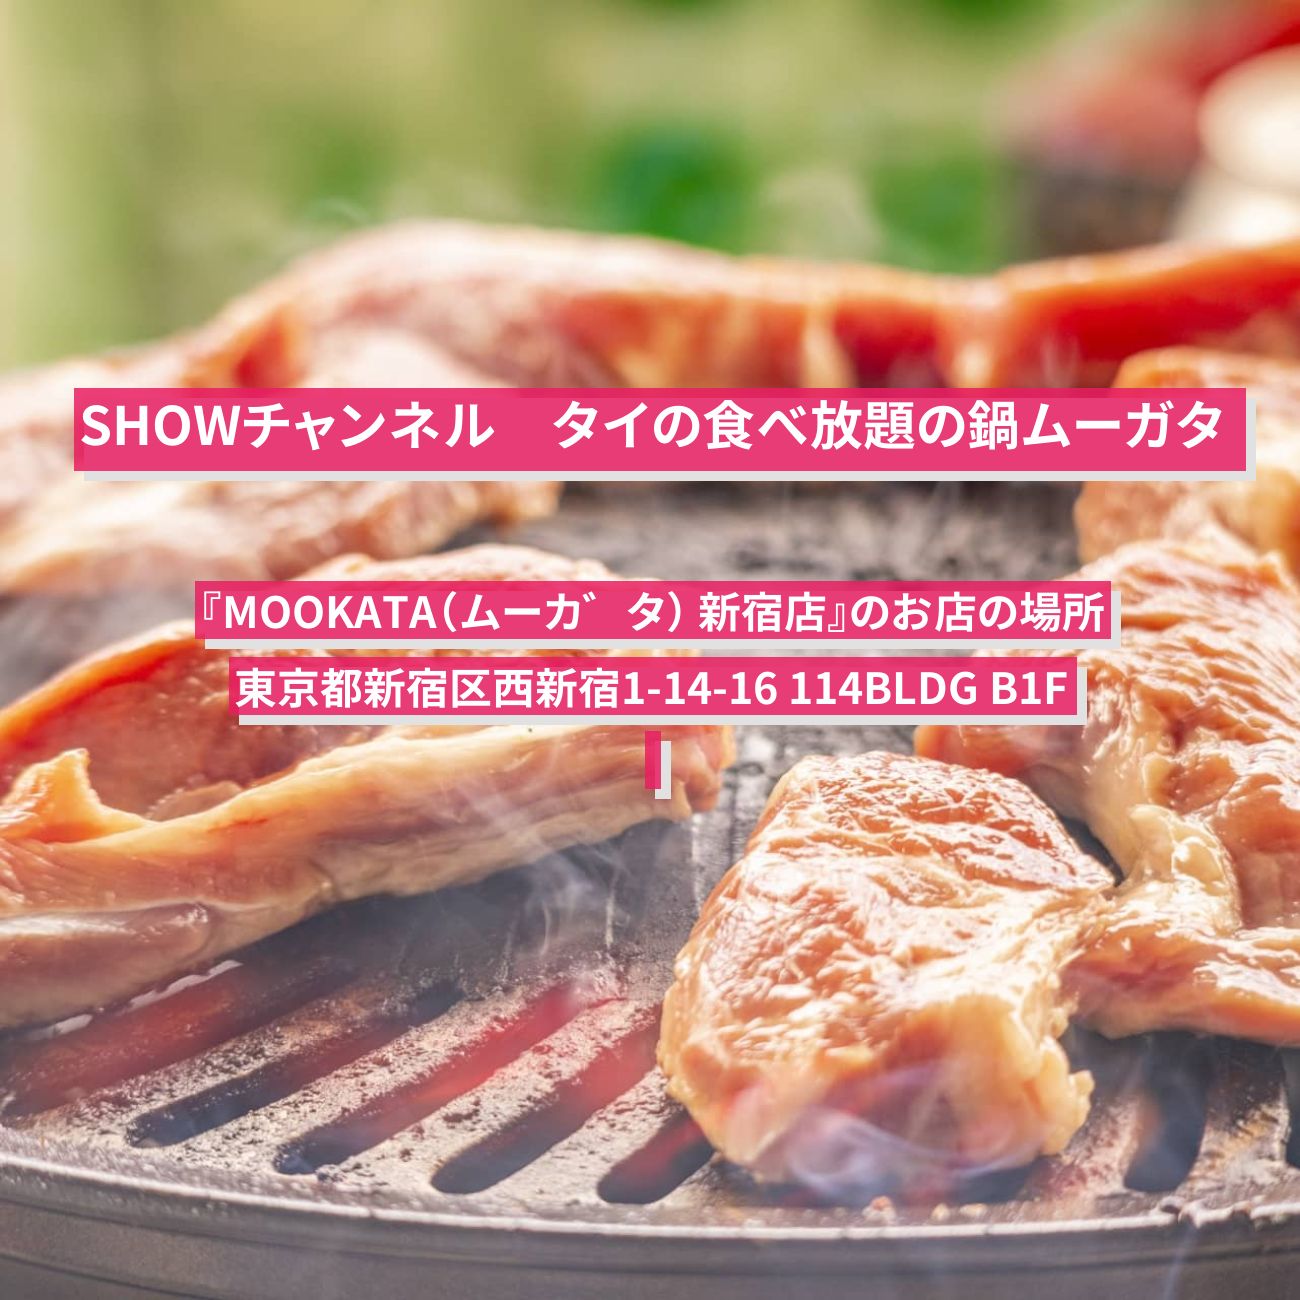 【SHOWチャンネル】ムーガタ(タイの食べ放題の鍋) 『MOOKATA』新宿のお店の場所〔羽鳥慎一〕